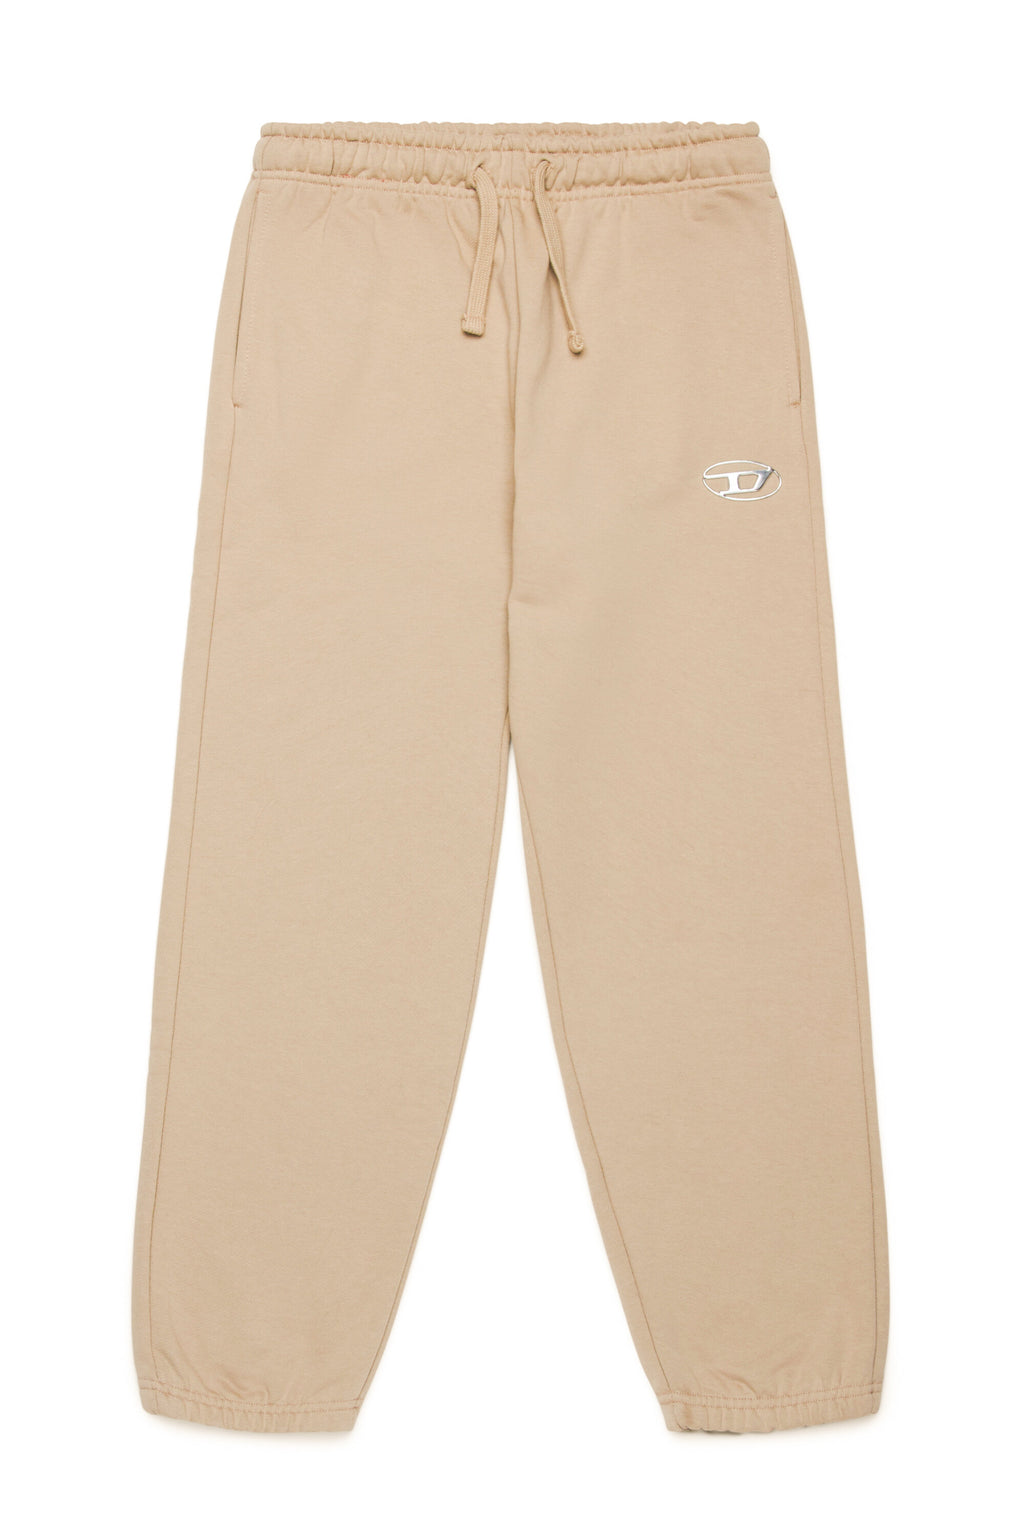 Oval D branded fleece jogger trousers